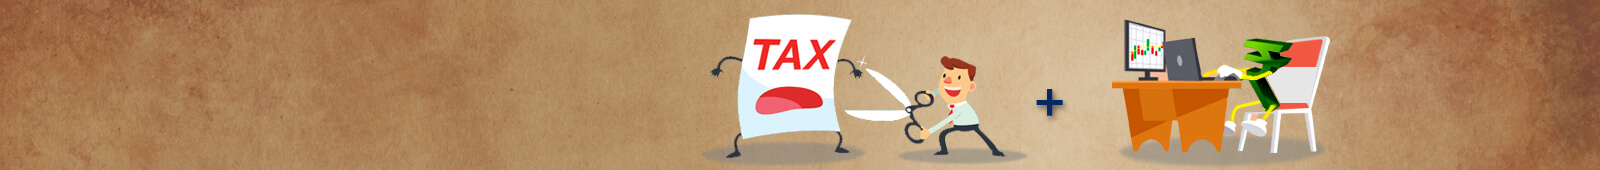 Best Tax Planning Options 